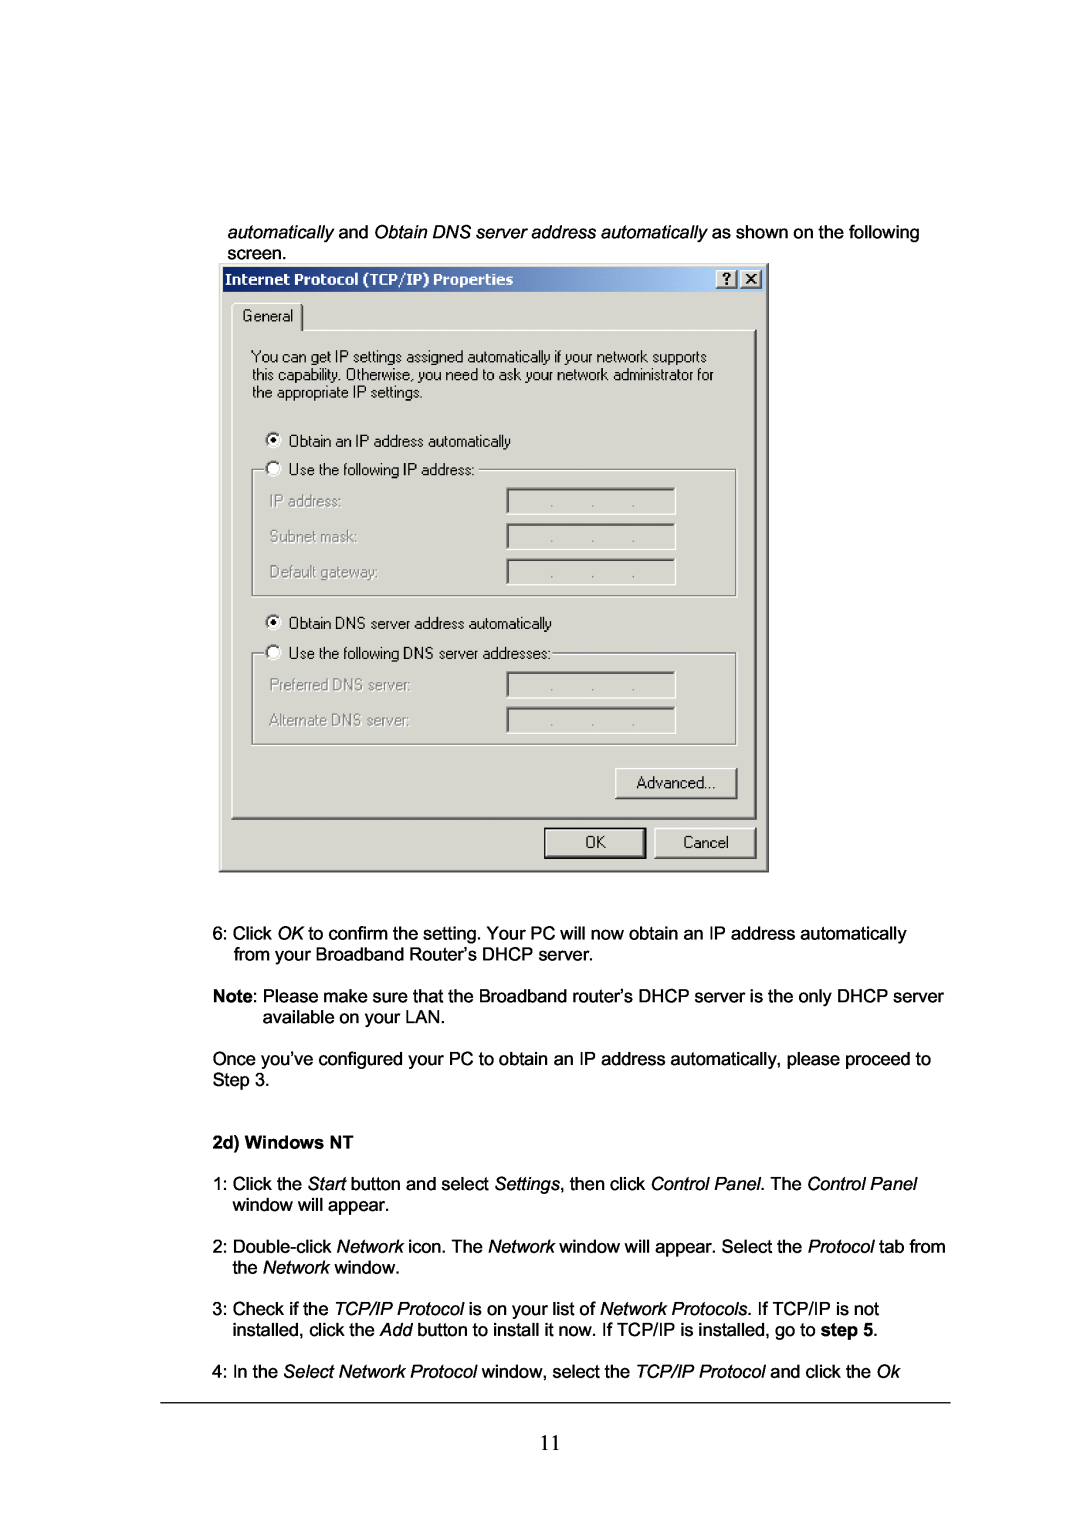 Topcom WBR 7101GMR manual 2d Windows NT 